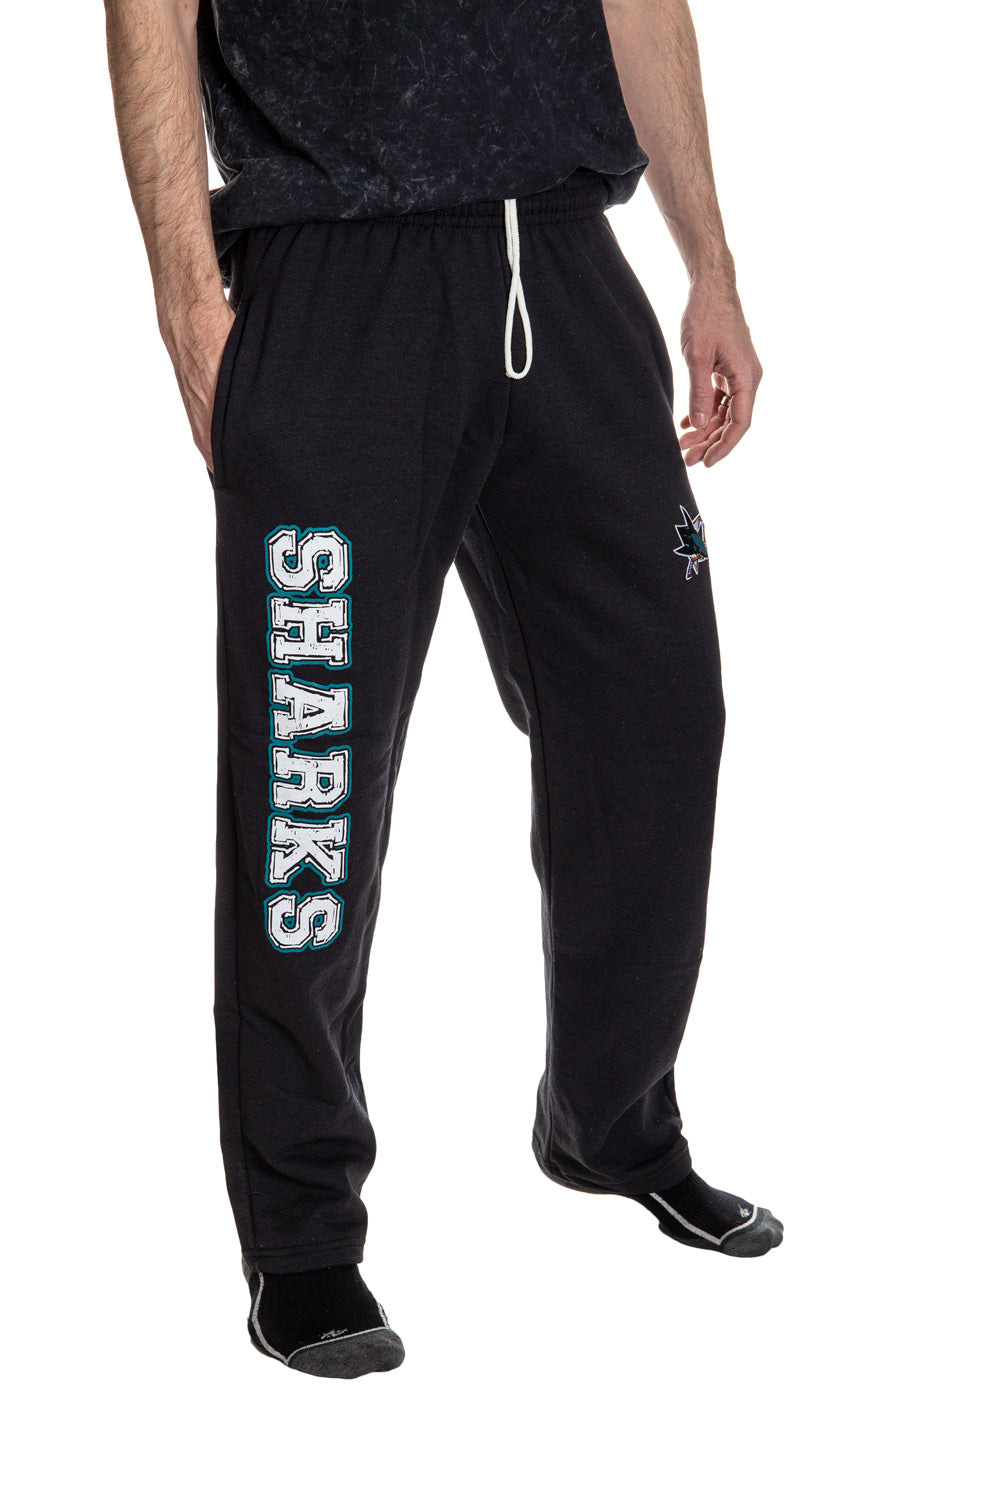 San Jose Sharks Premium Fleece Sweatpants Side View of Sharks Print On Leg.